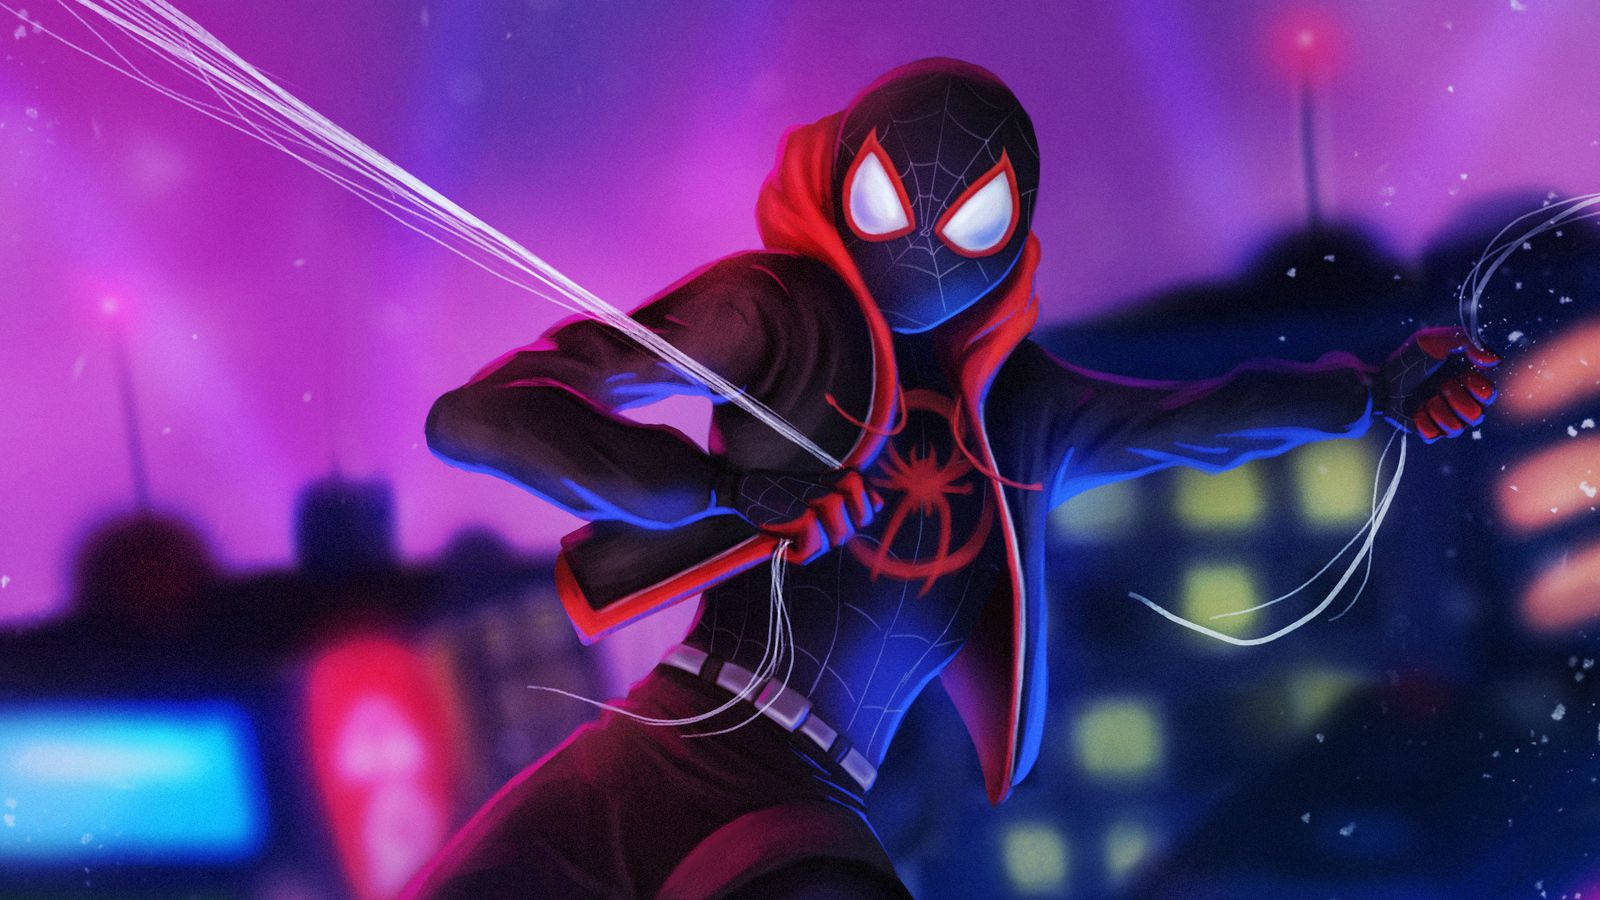 Spiderman Spider-verse Fan Art Wallpaper